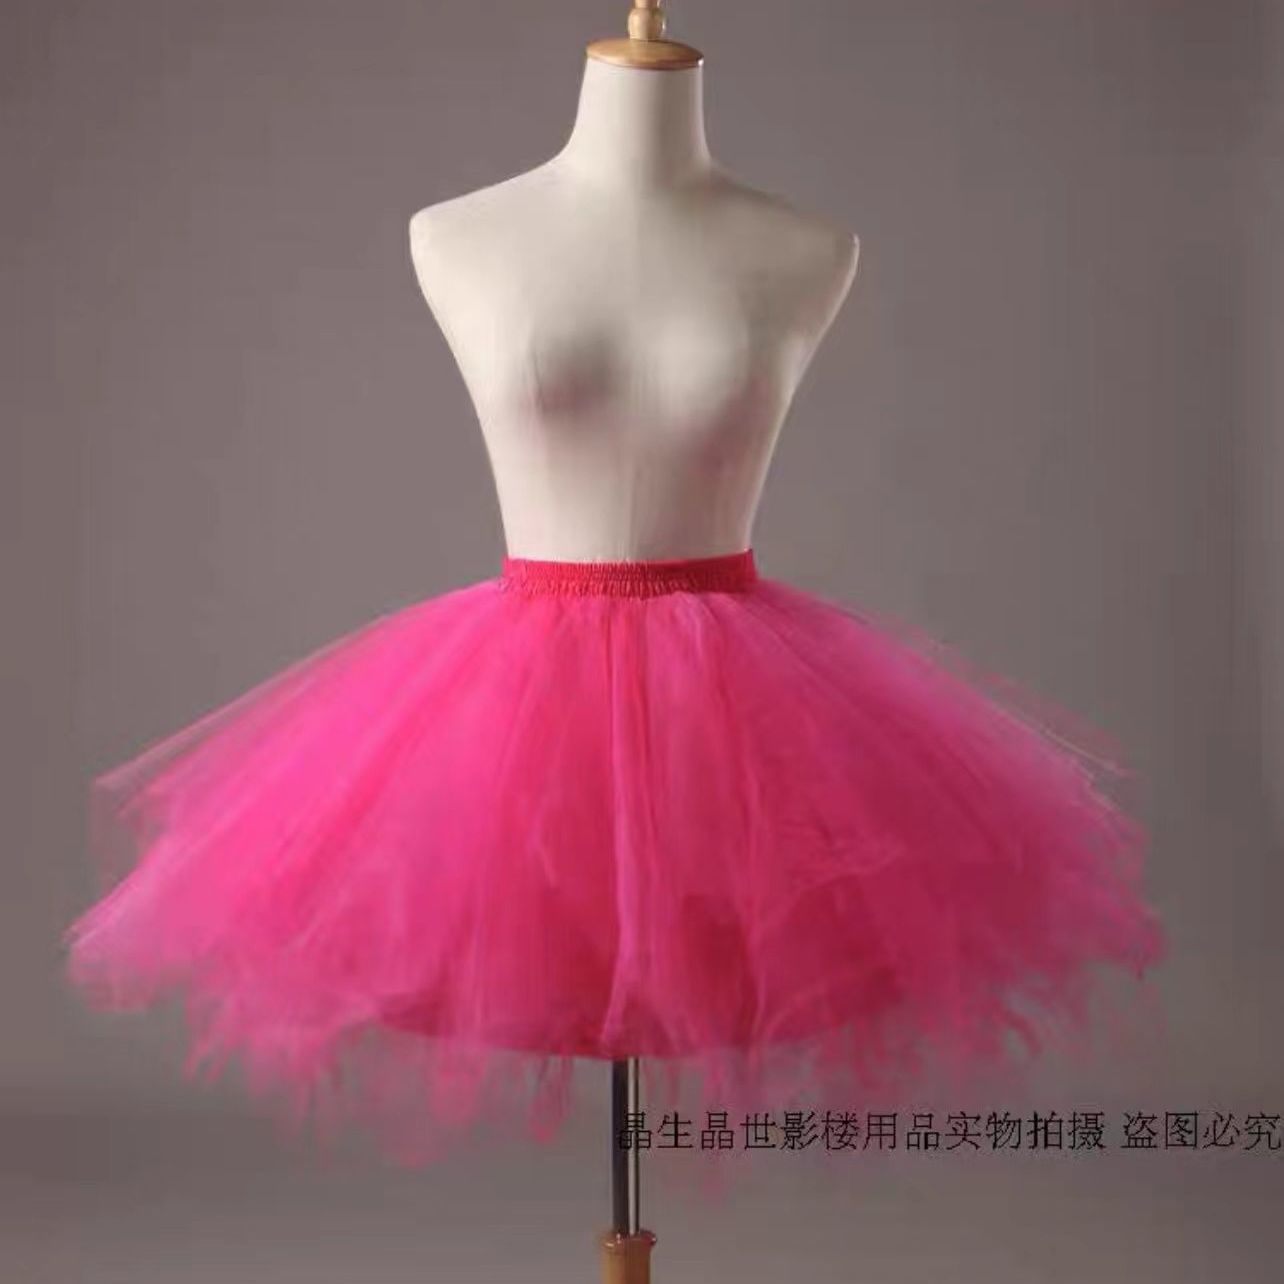 Tutu skirt skirt women's gauze skirt princess dress performance costume photography small skirt colorful gauze skirt dancing